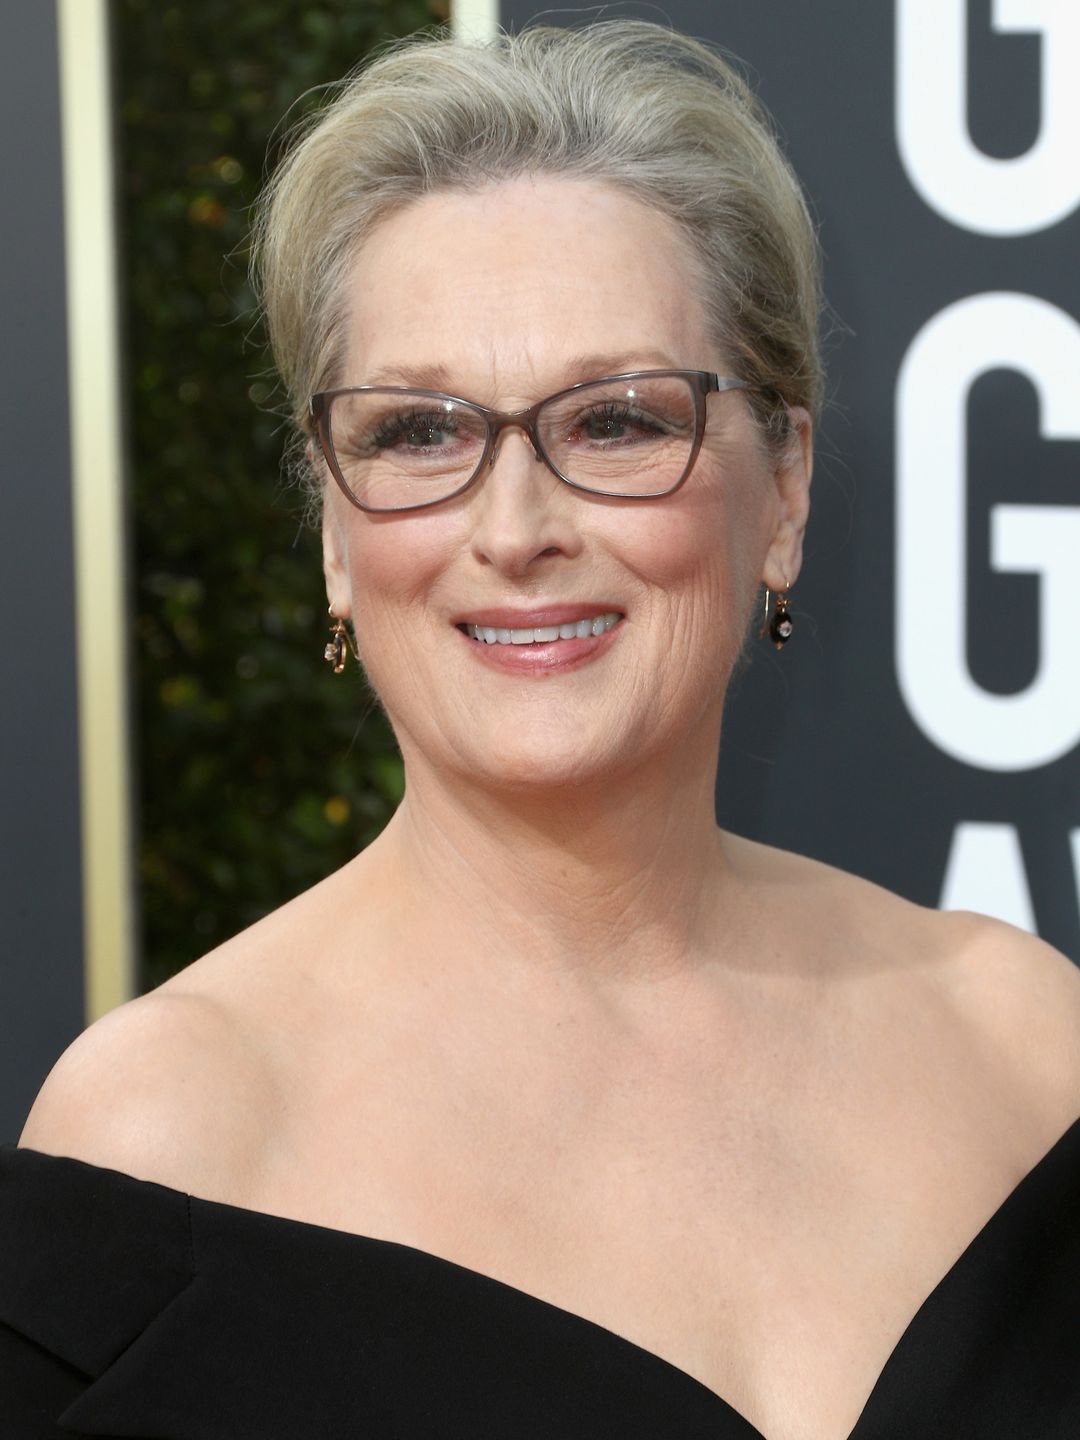 Meryl Streep unphotoshopped pictures